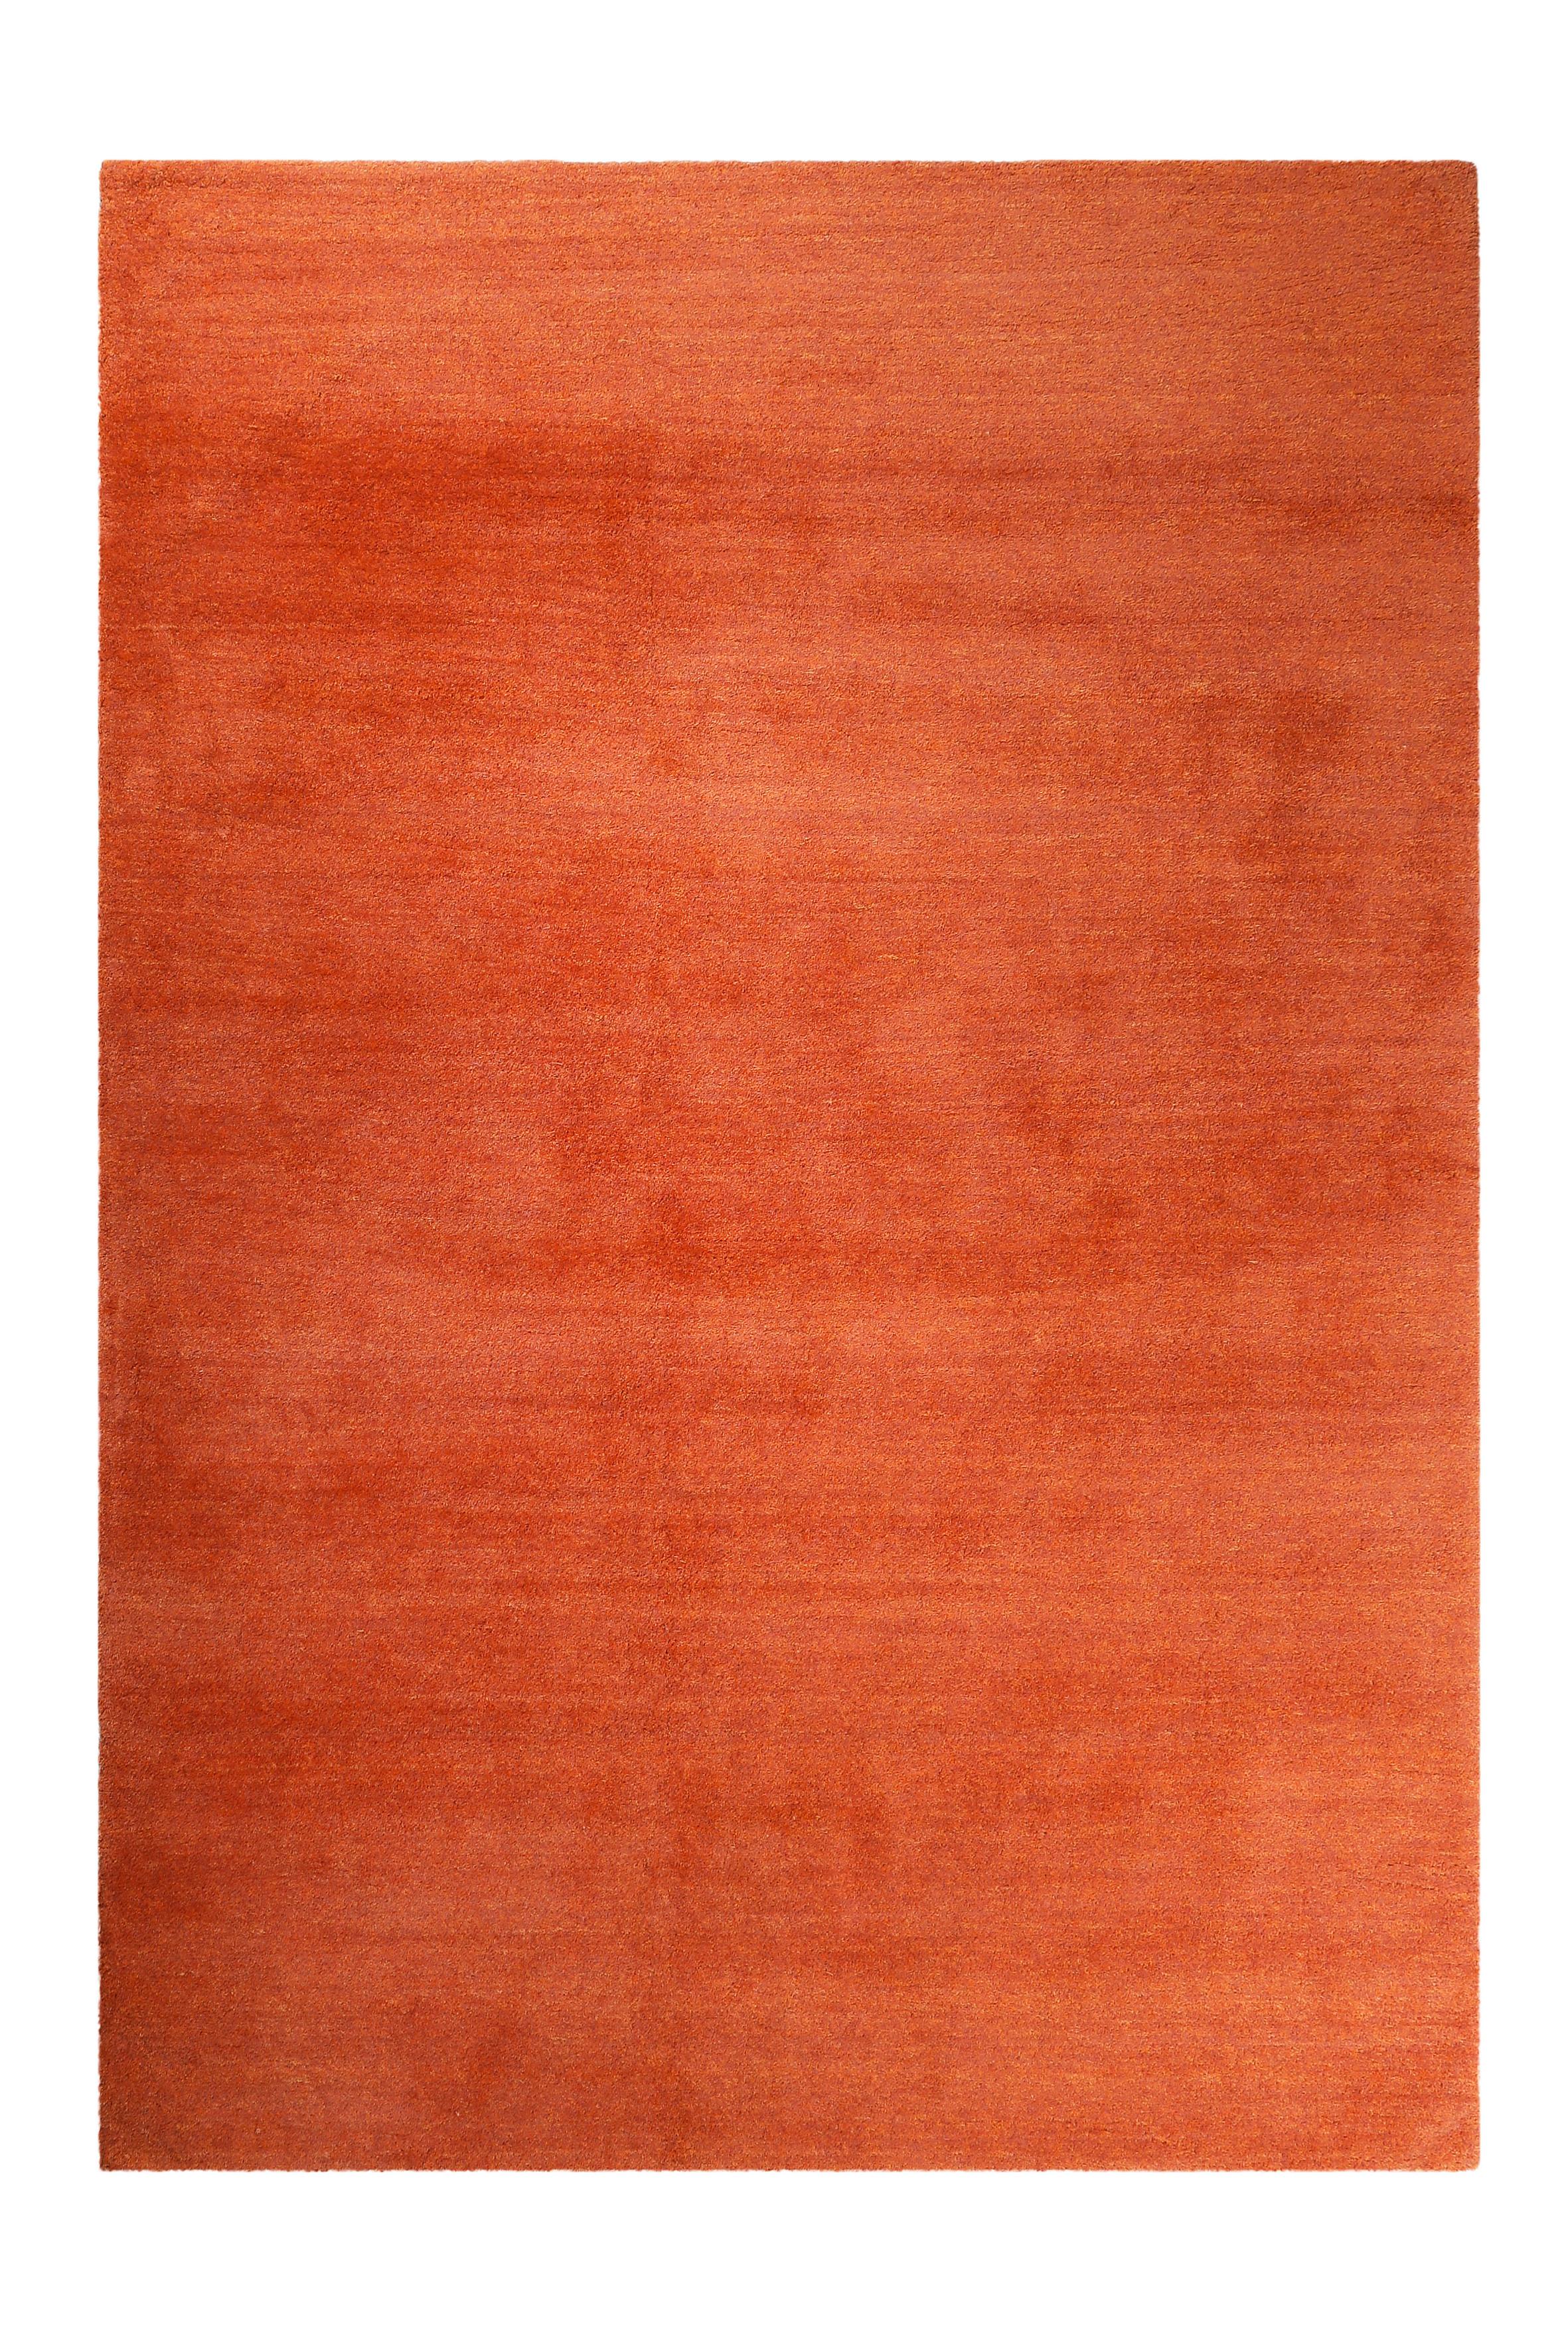 Hochflor Teppich Orange Loft 70x140 cm - Orange, Basics, Textil (70/140cm) - Esprit